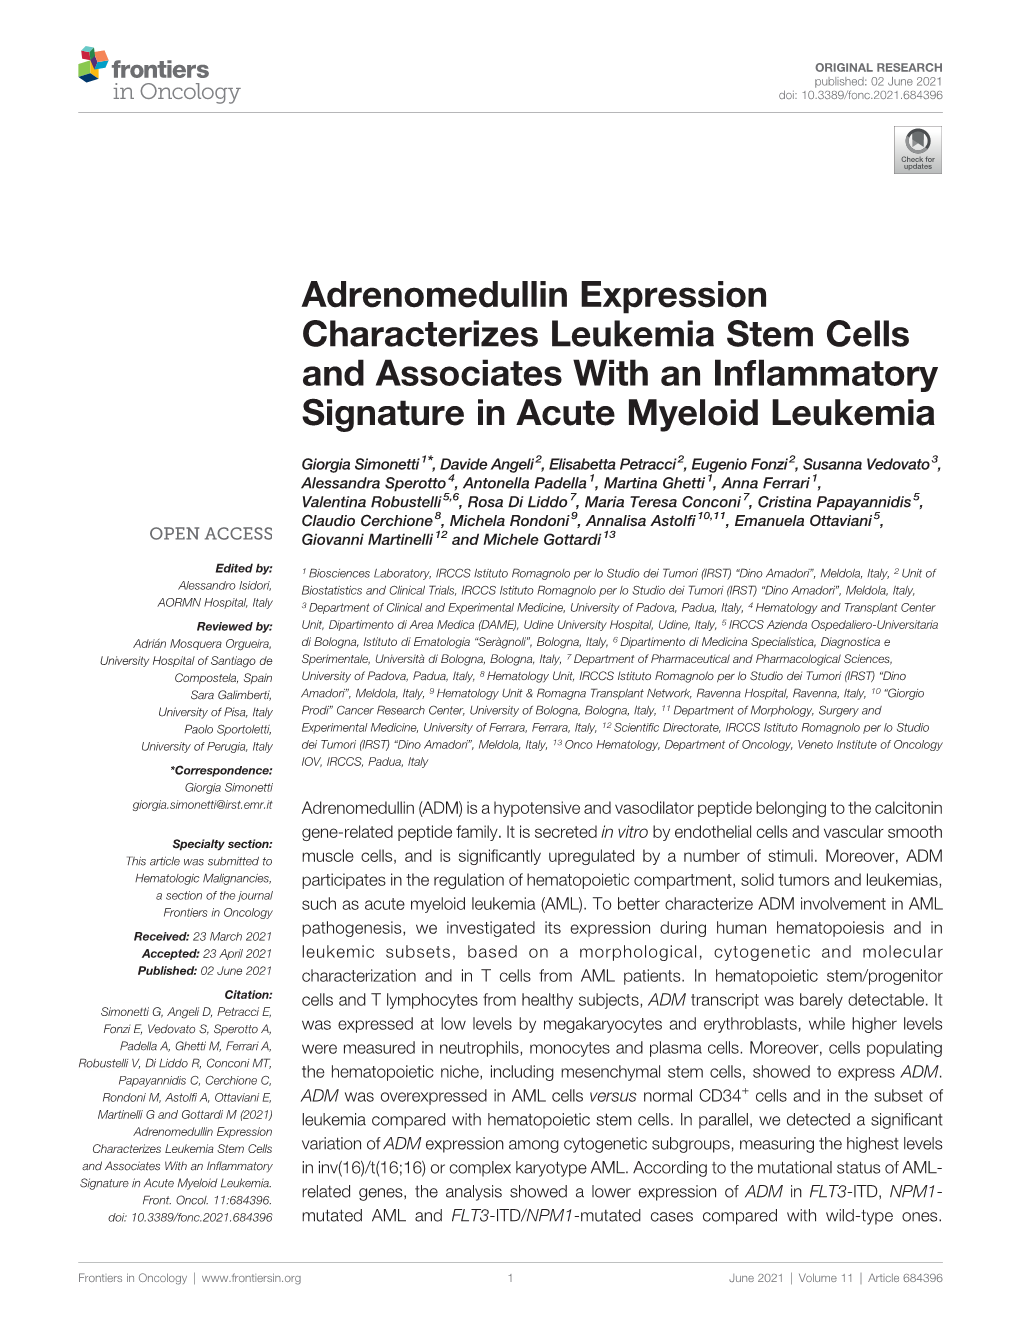 Adrenomedullin Expression Characterizes Leukemia Stem Cells and Associates with an Inﬂammatory Signature in Acute Myeloid Leukemia